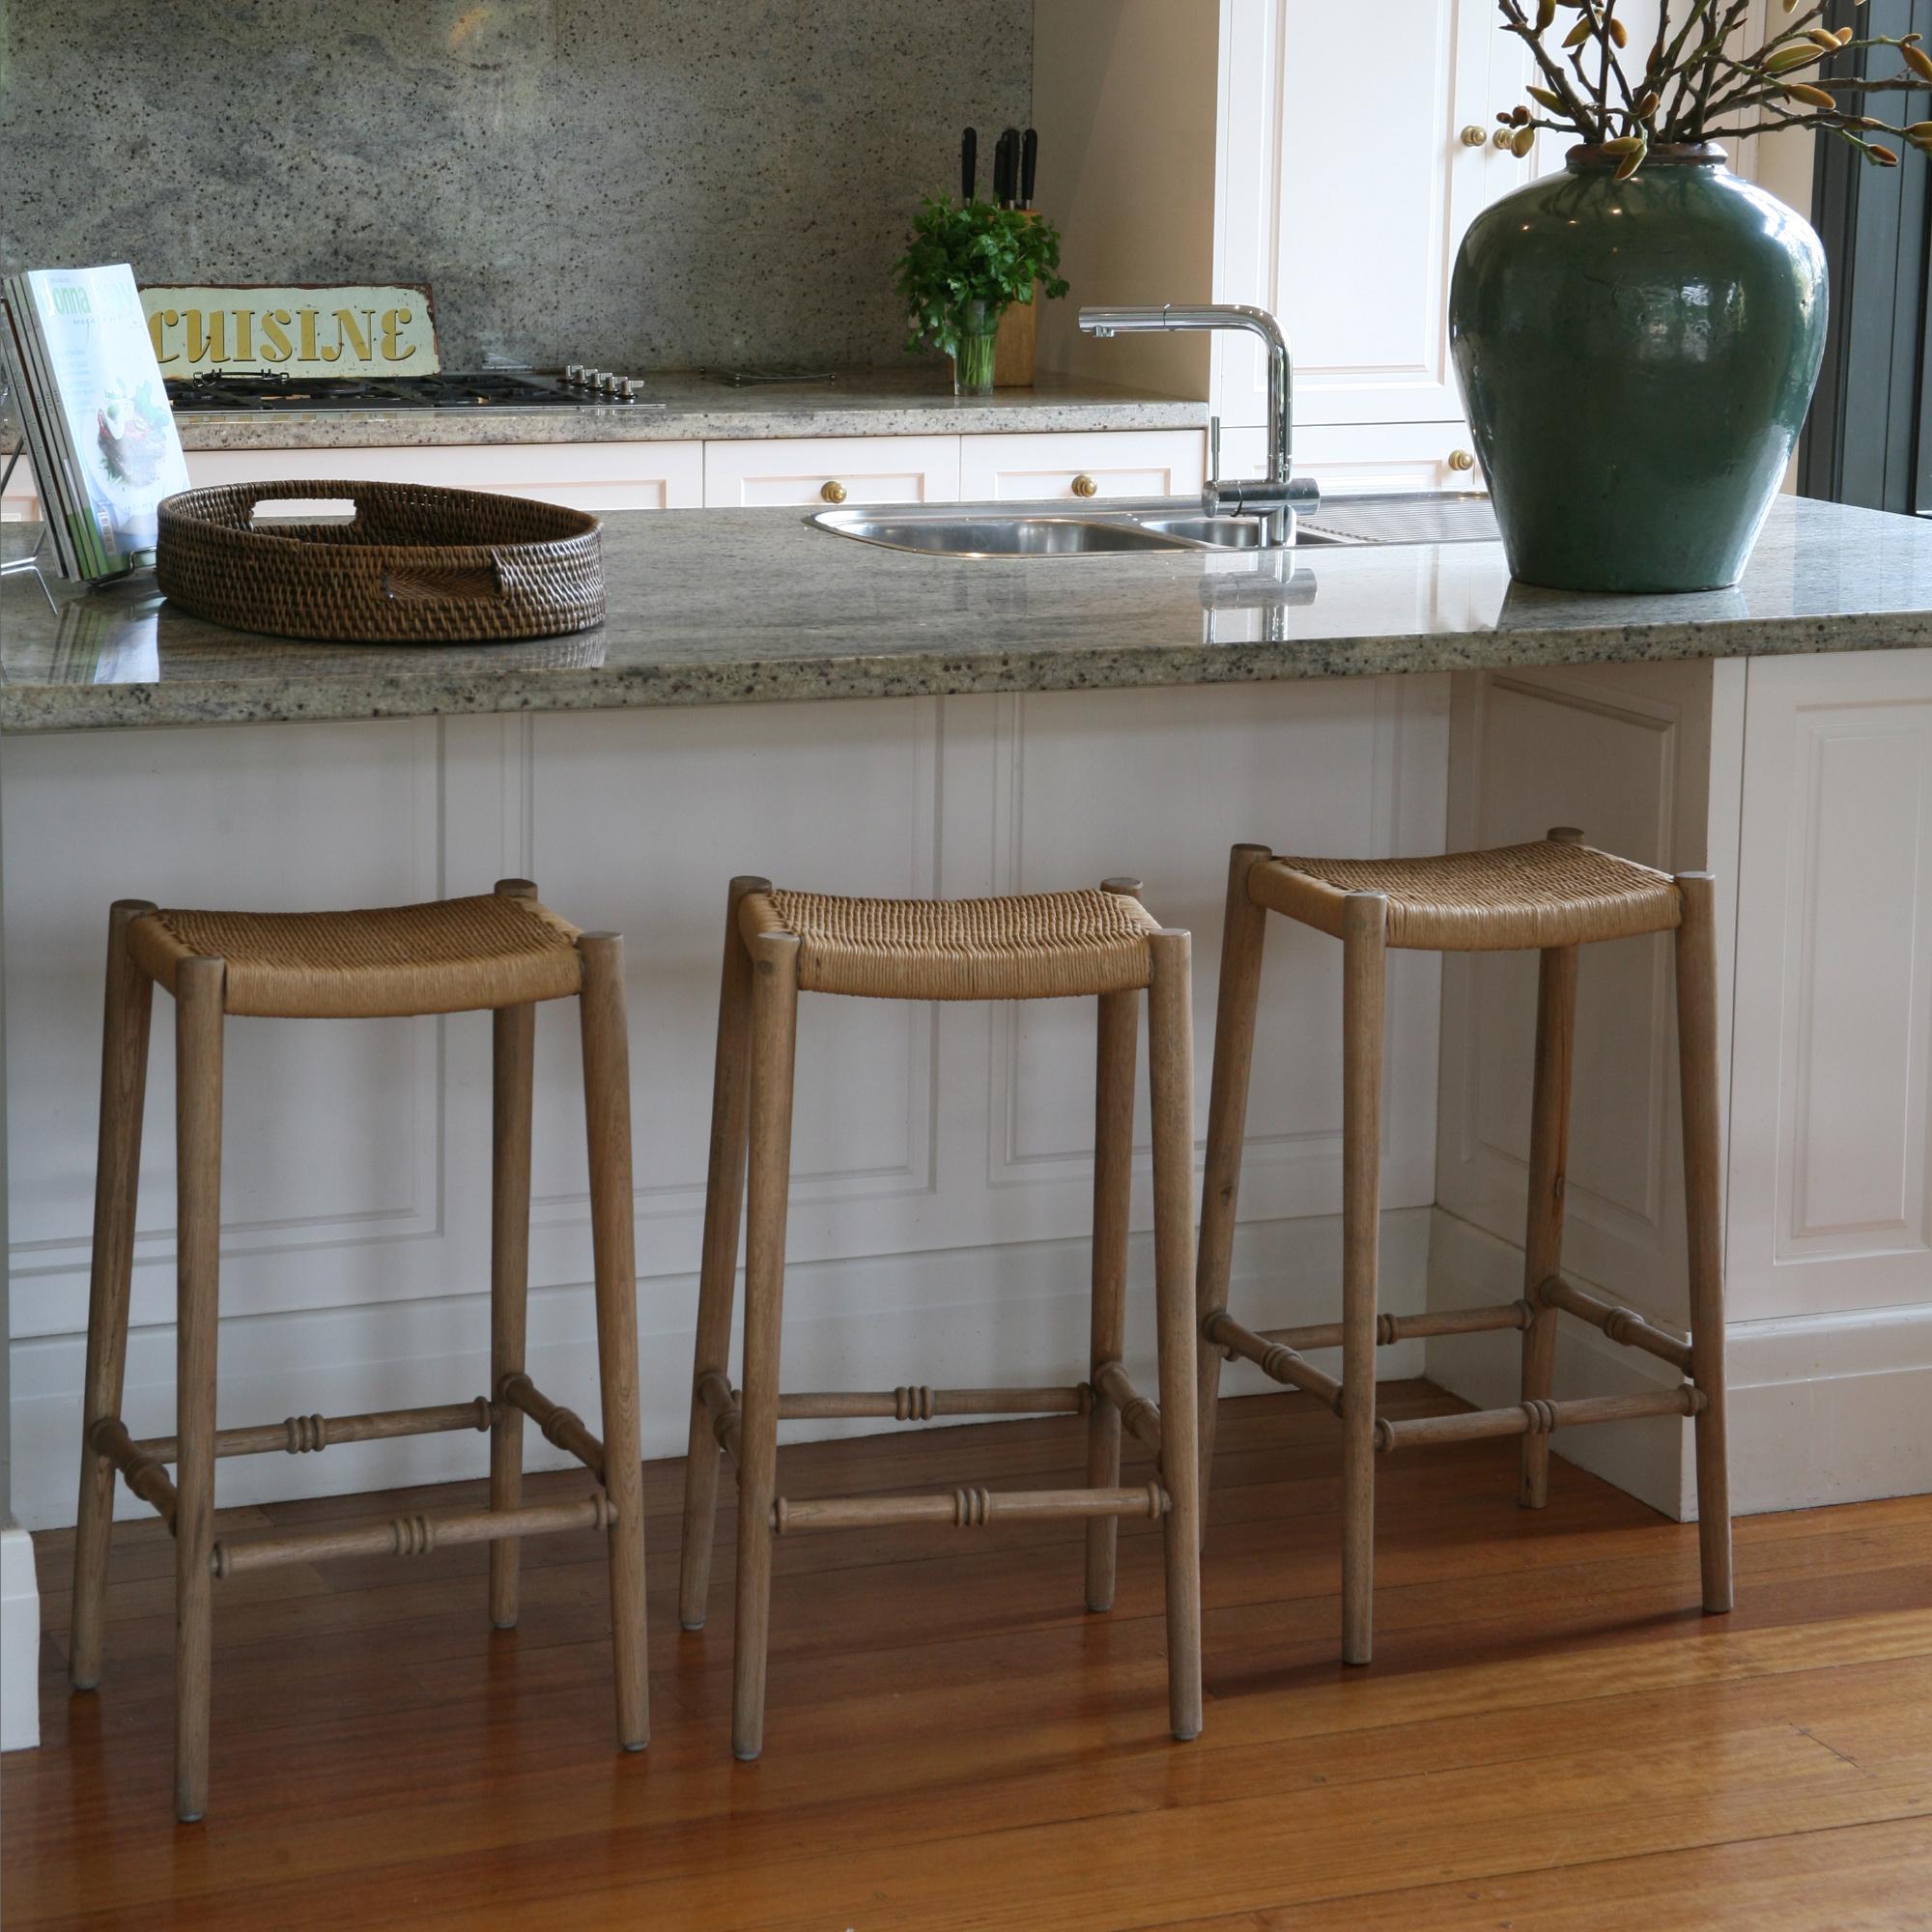 wicker-kitchen-stools